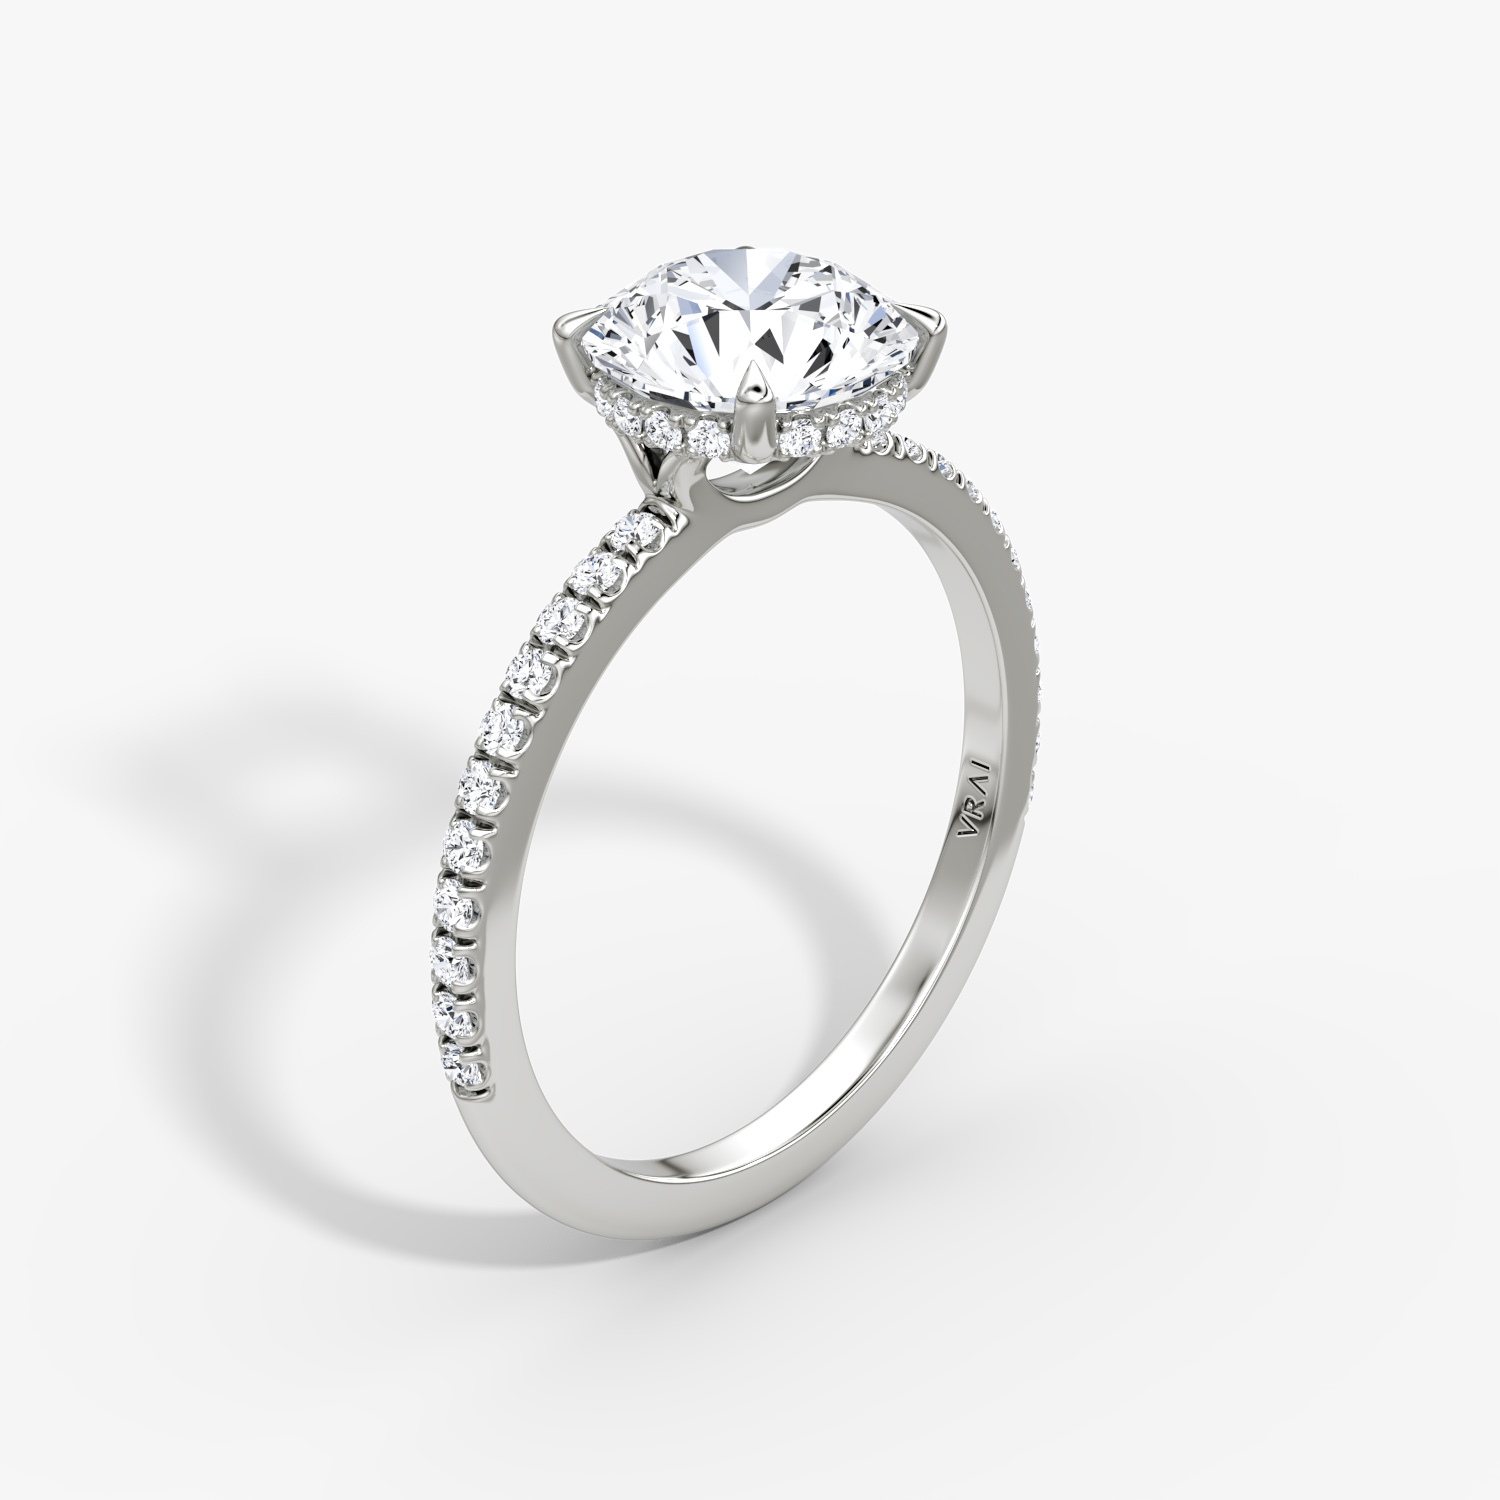 Halo Engagement Rings - Bespoke Diamonds Dublin in Ireland